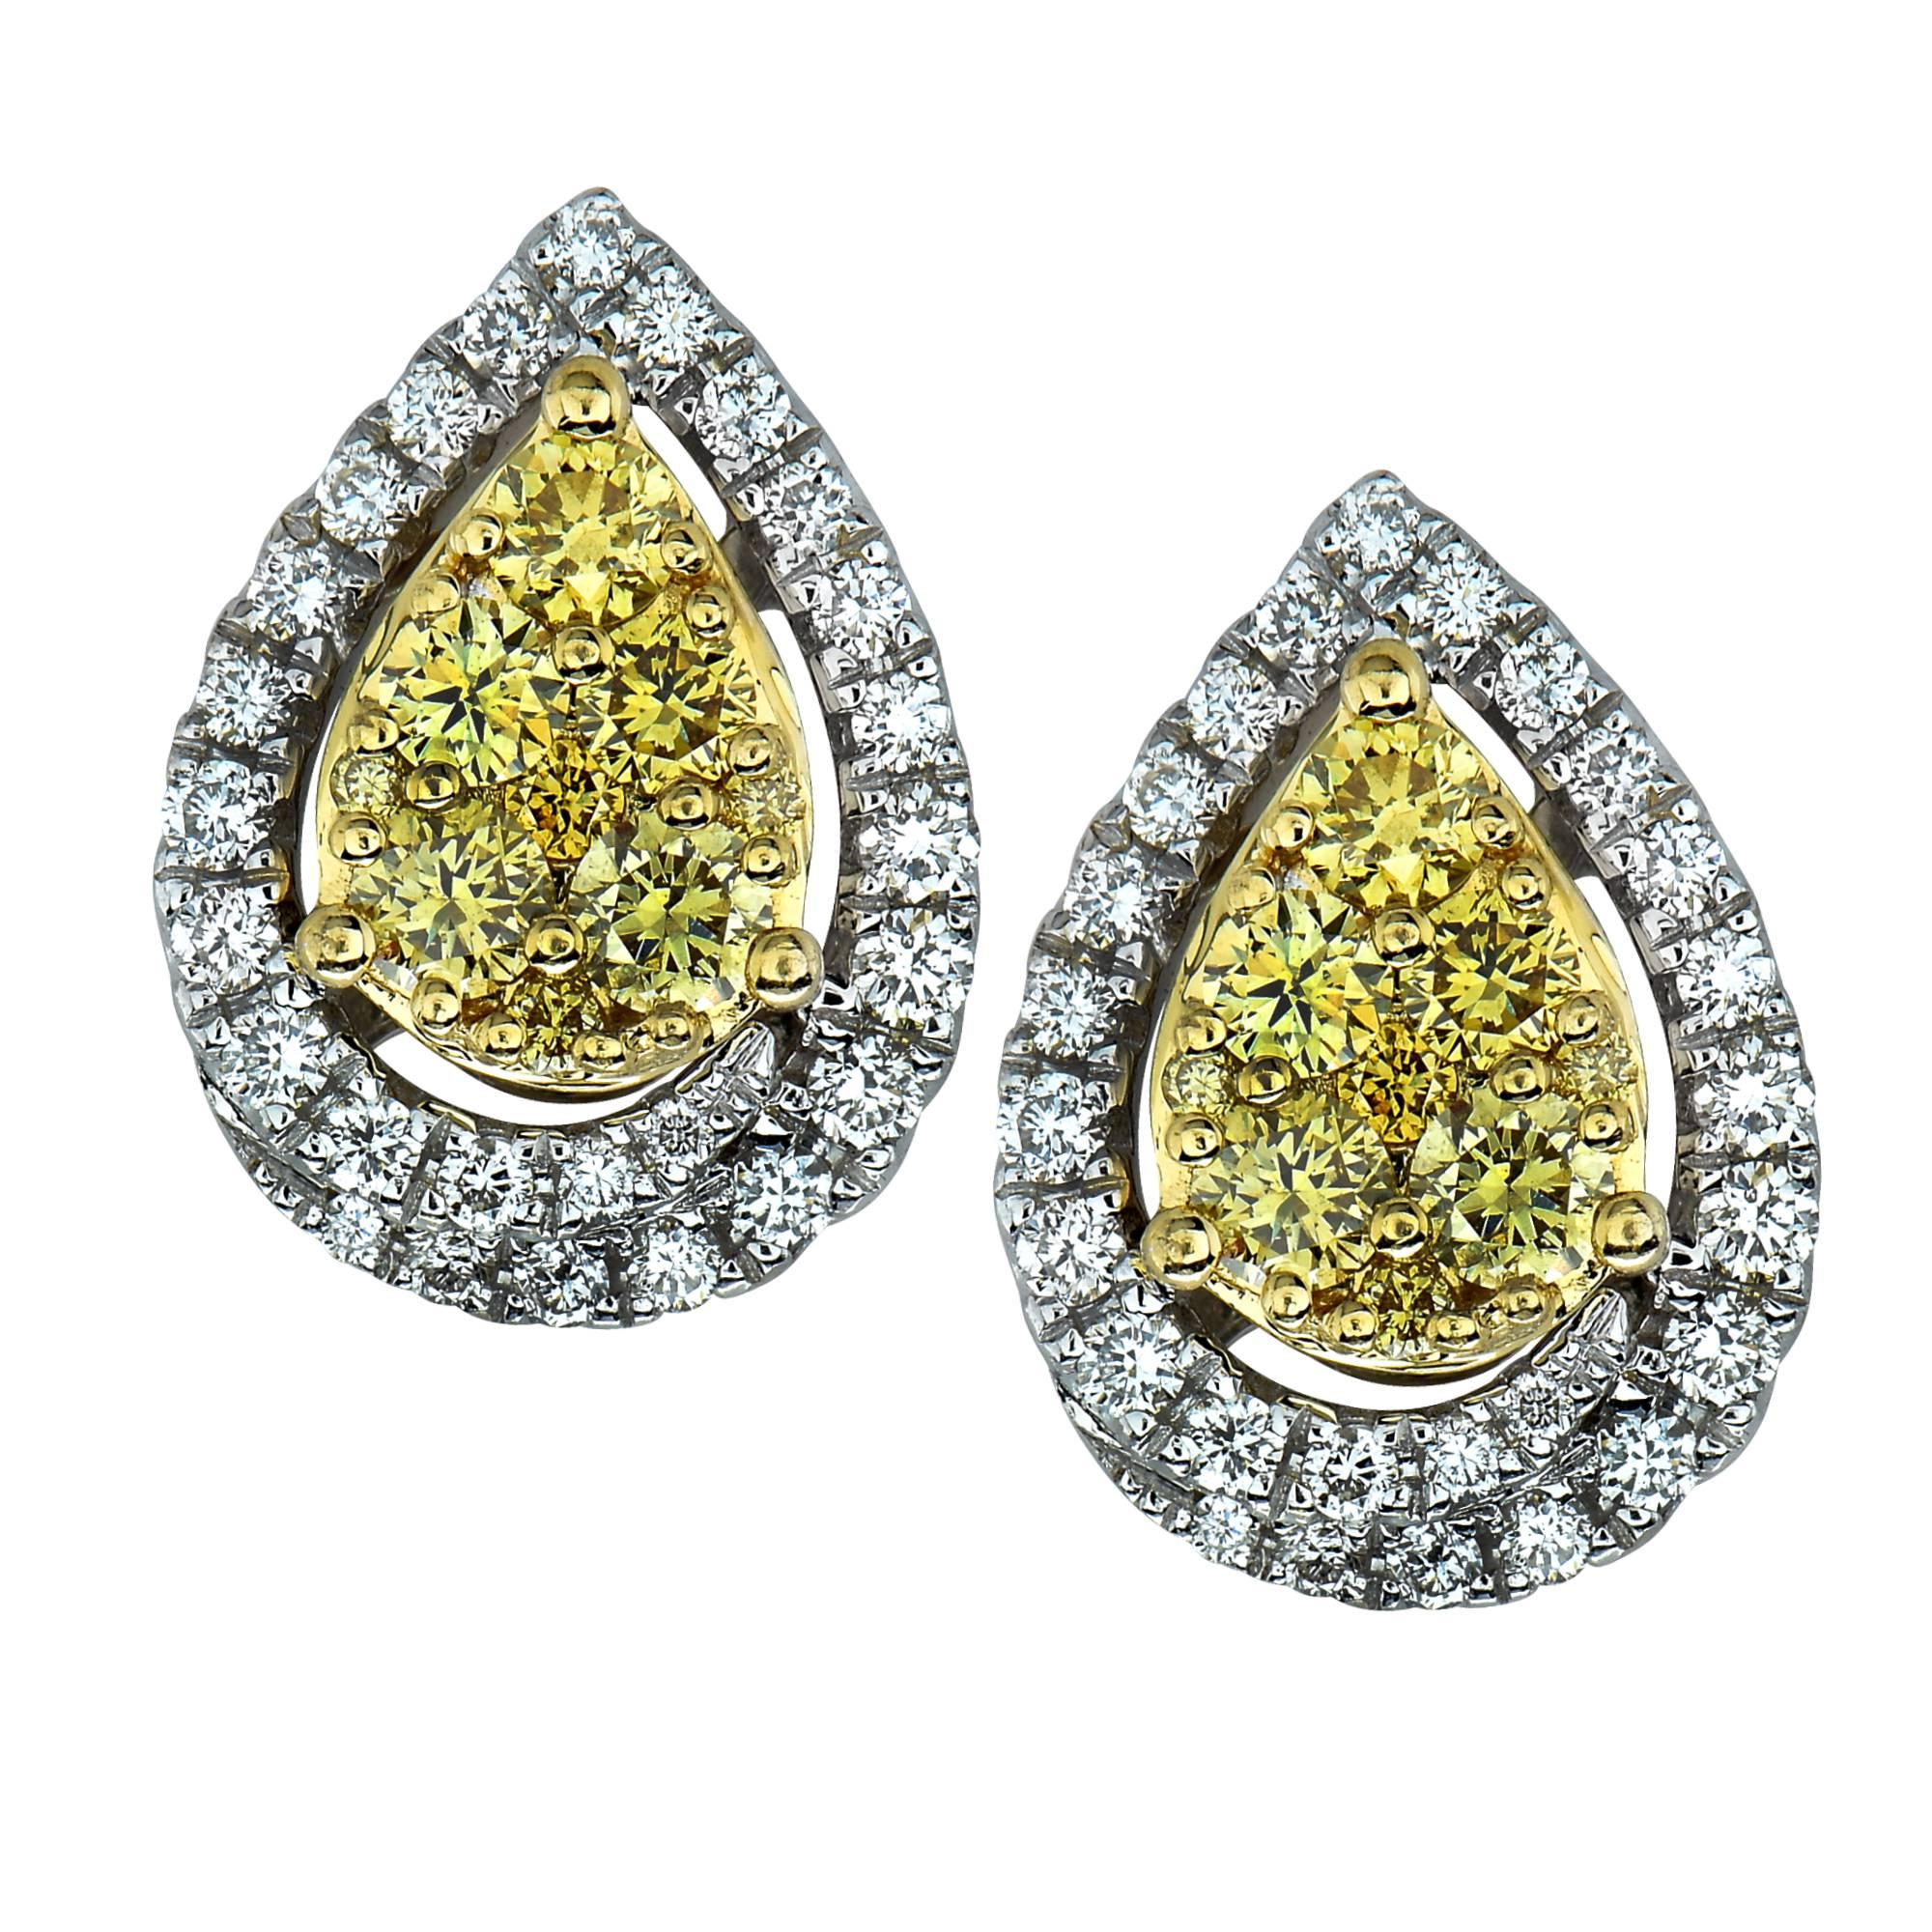 1 Carat Diamond 18 Karat White and Yellow Gold Stud Earrings